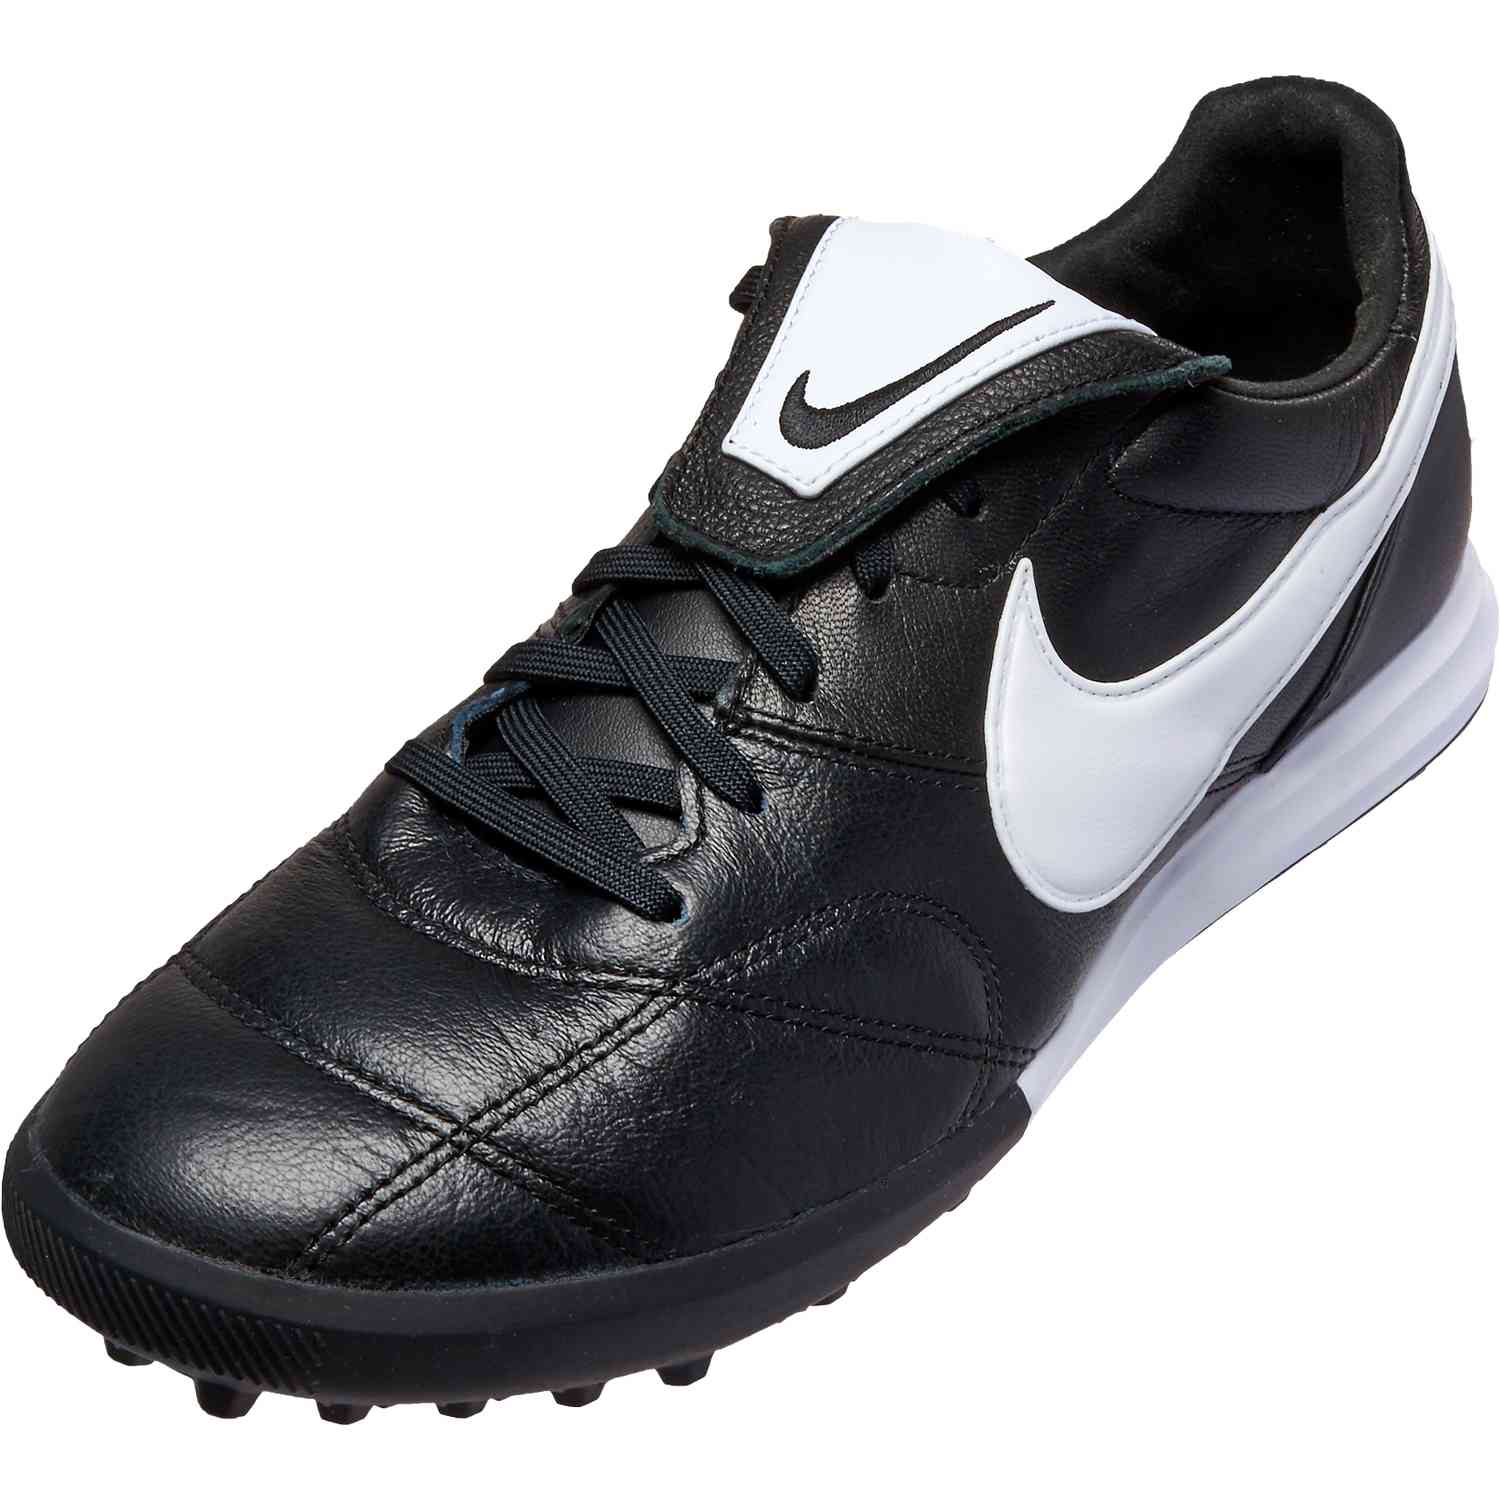 Nike Premier II TF - Black/White - SoccerPro